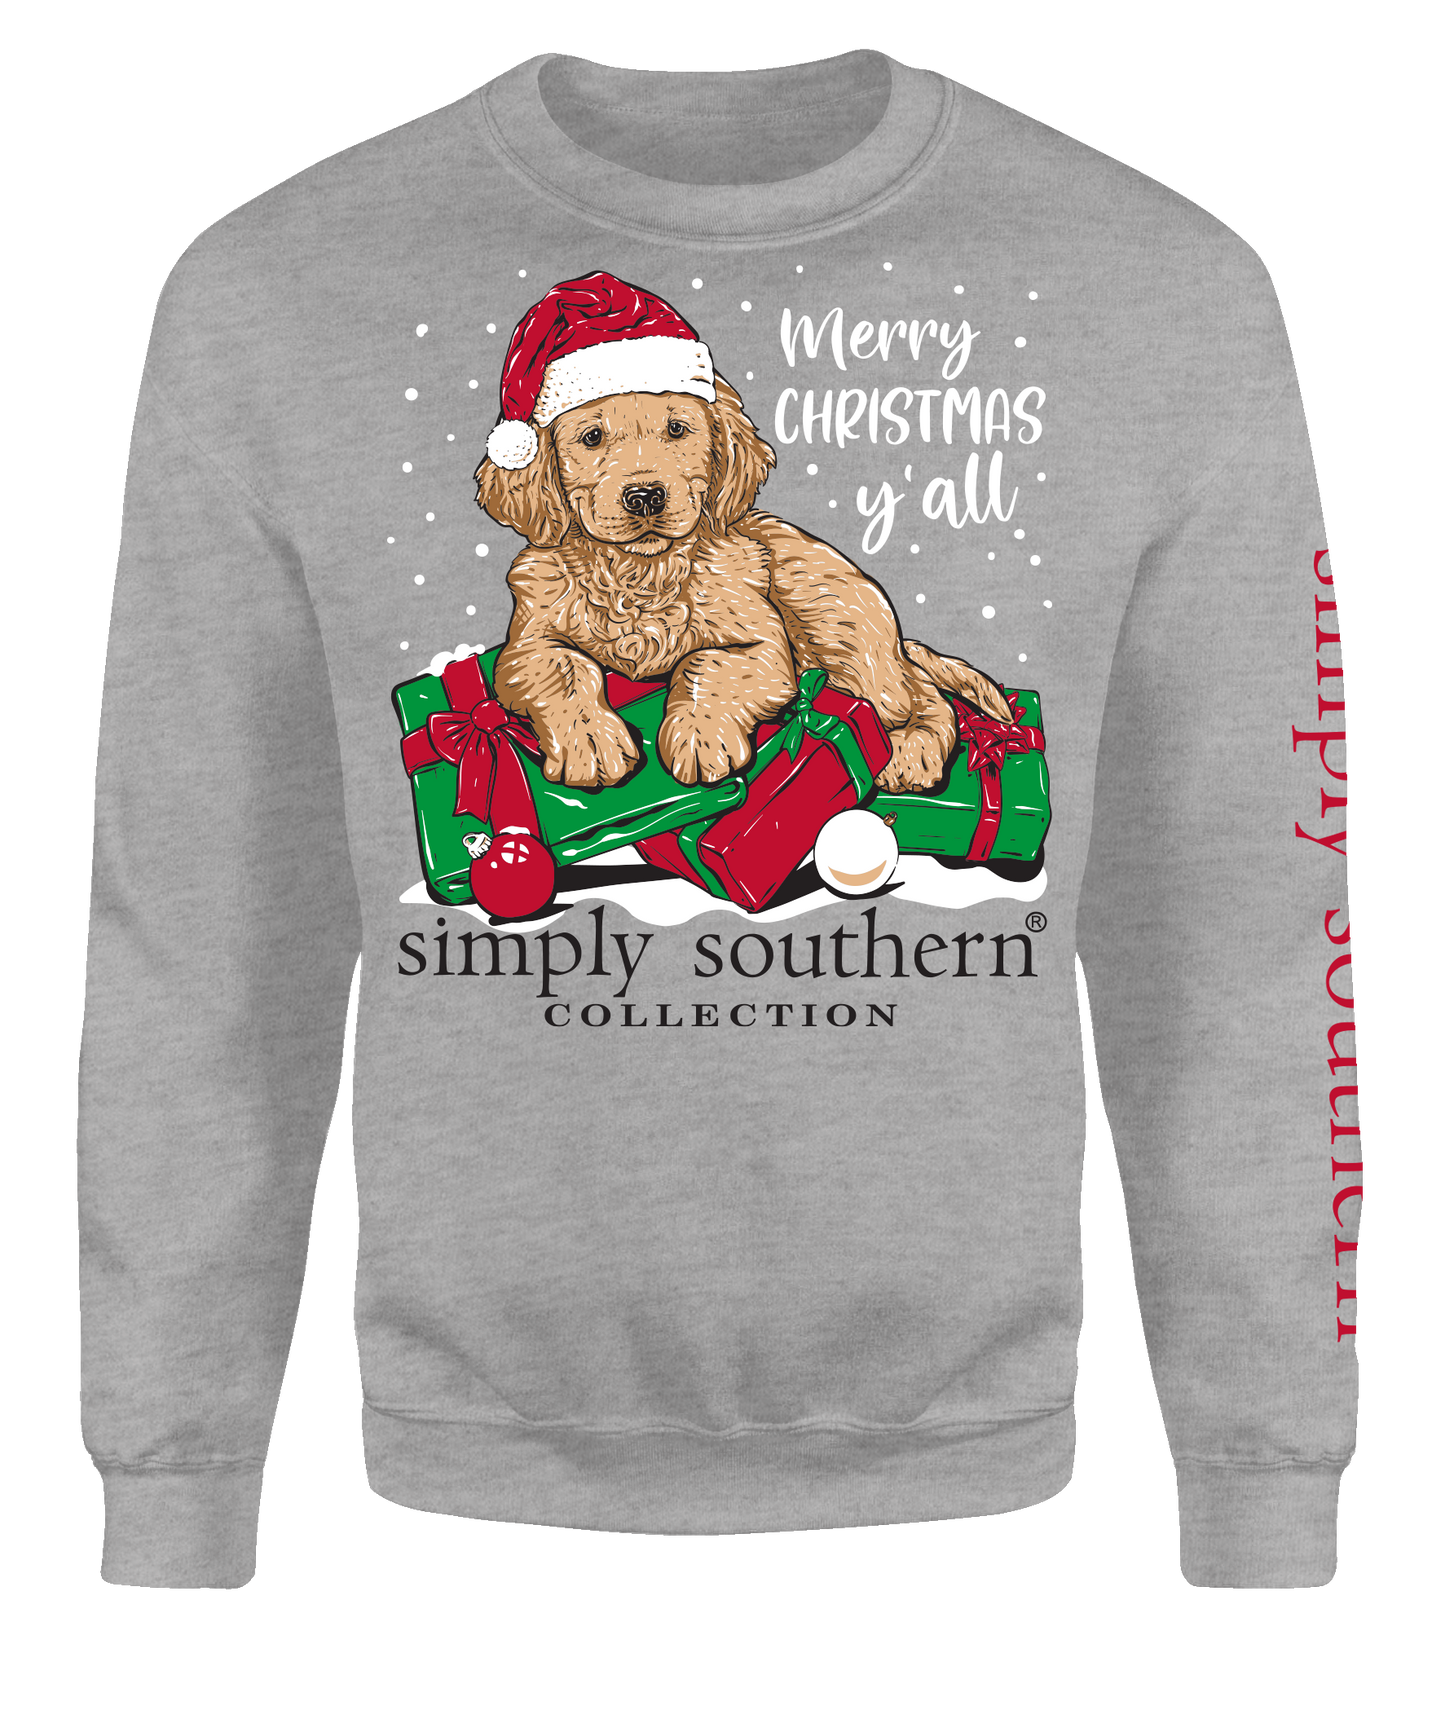 "Merry Christmas Y'all" Crew Sweatshirt